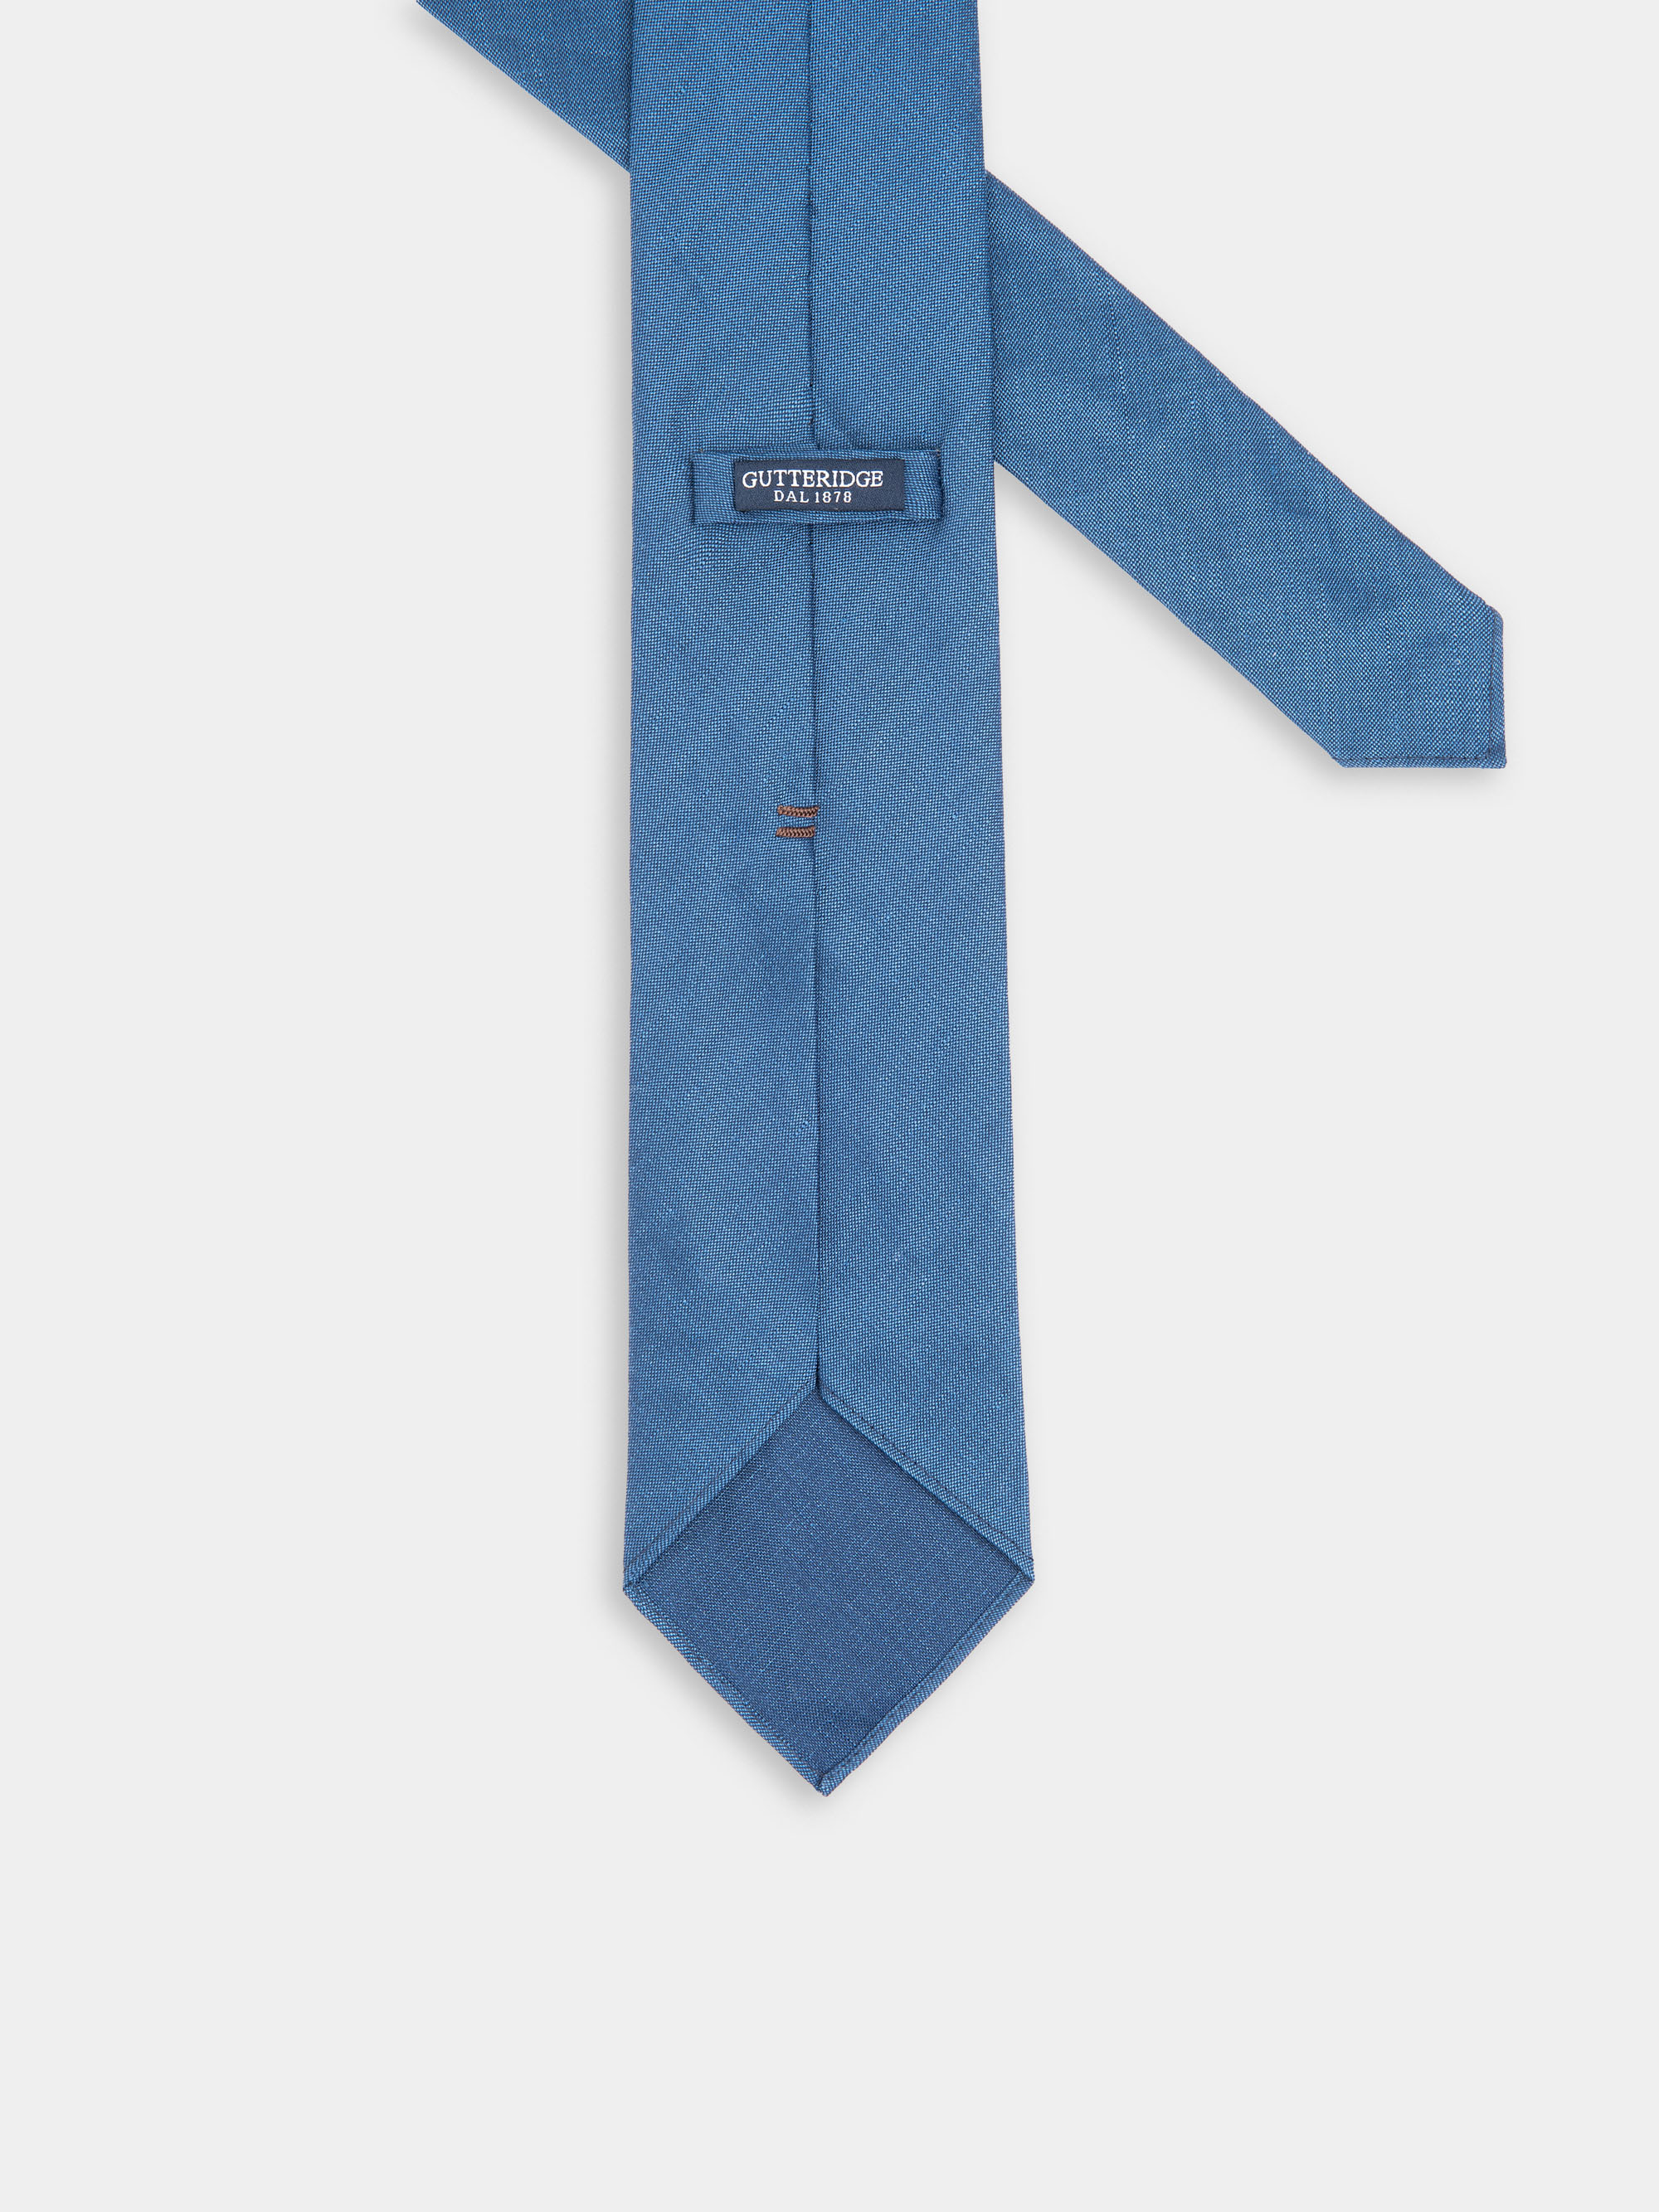 Cravatta tinta unita in lino e cotone | Gutteridge |  catalog-gutteridge-storefront Uomo